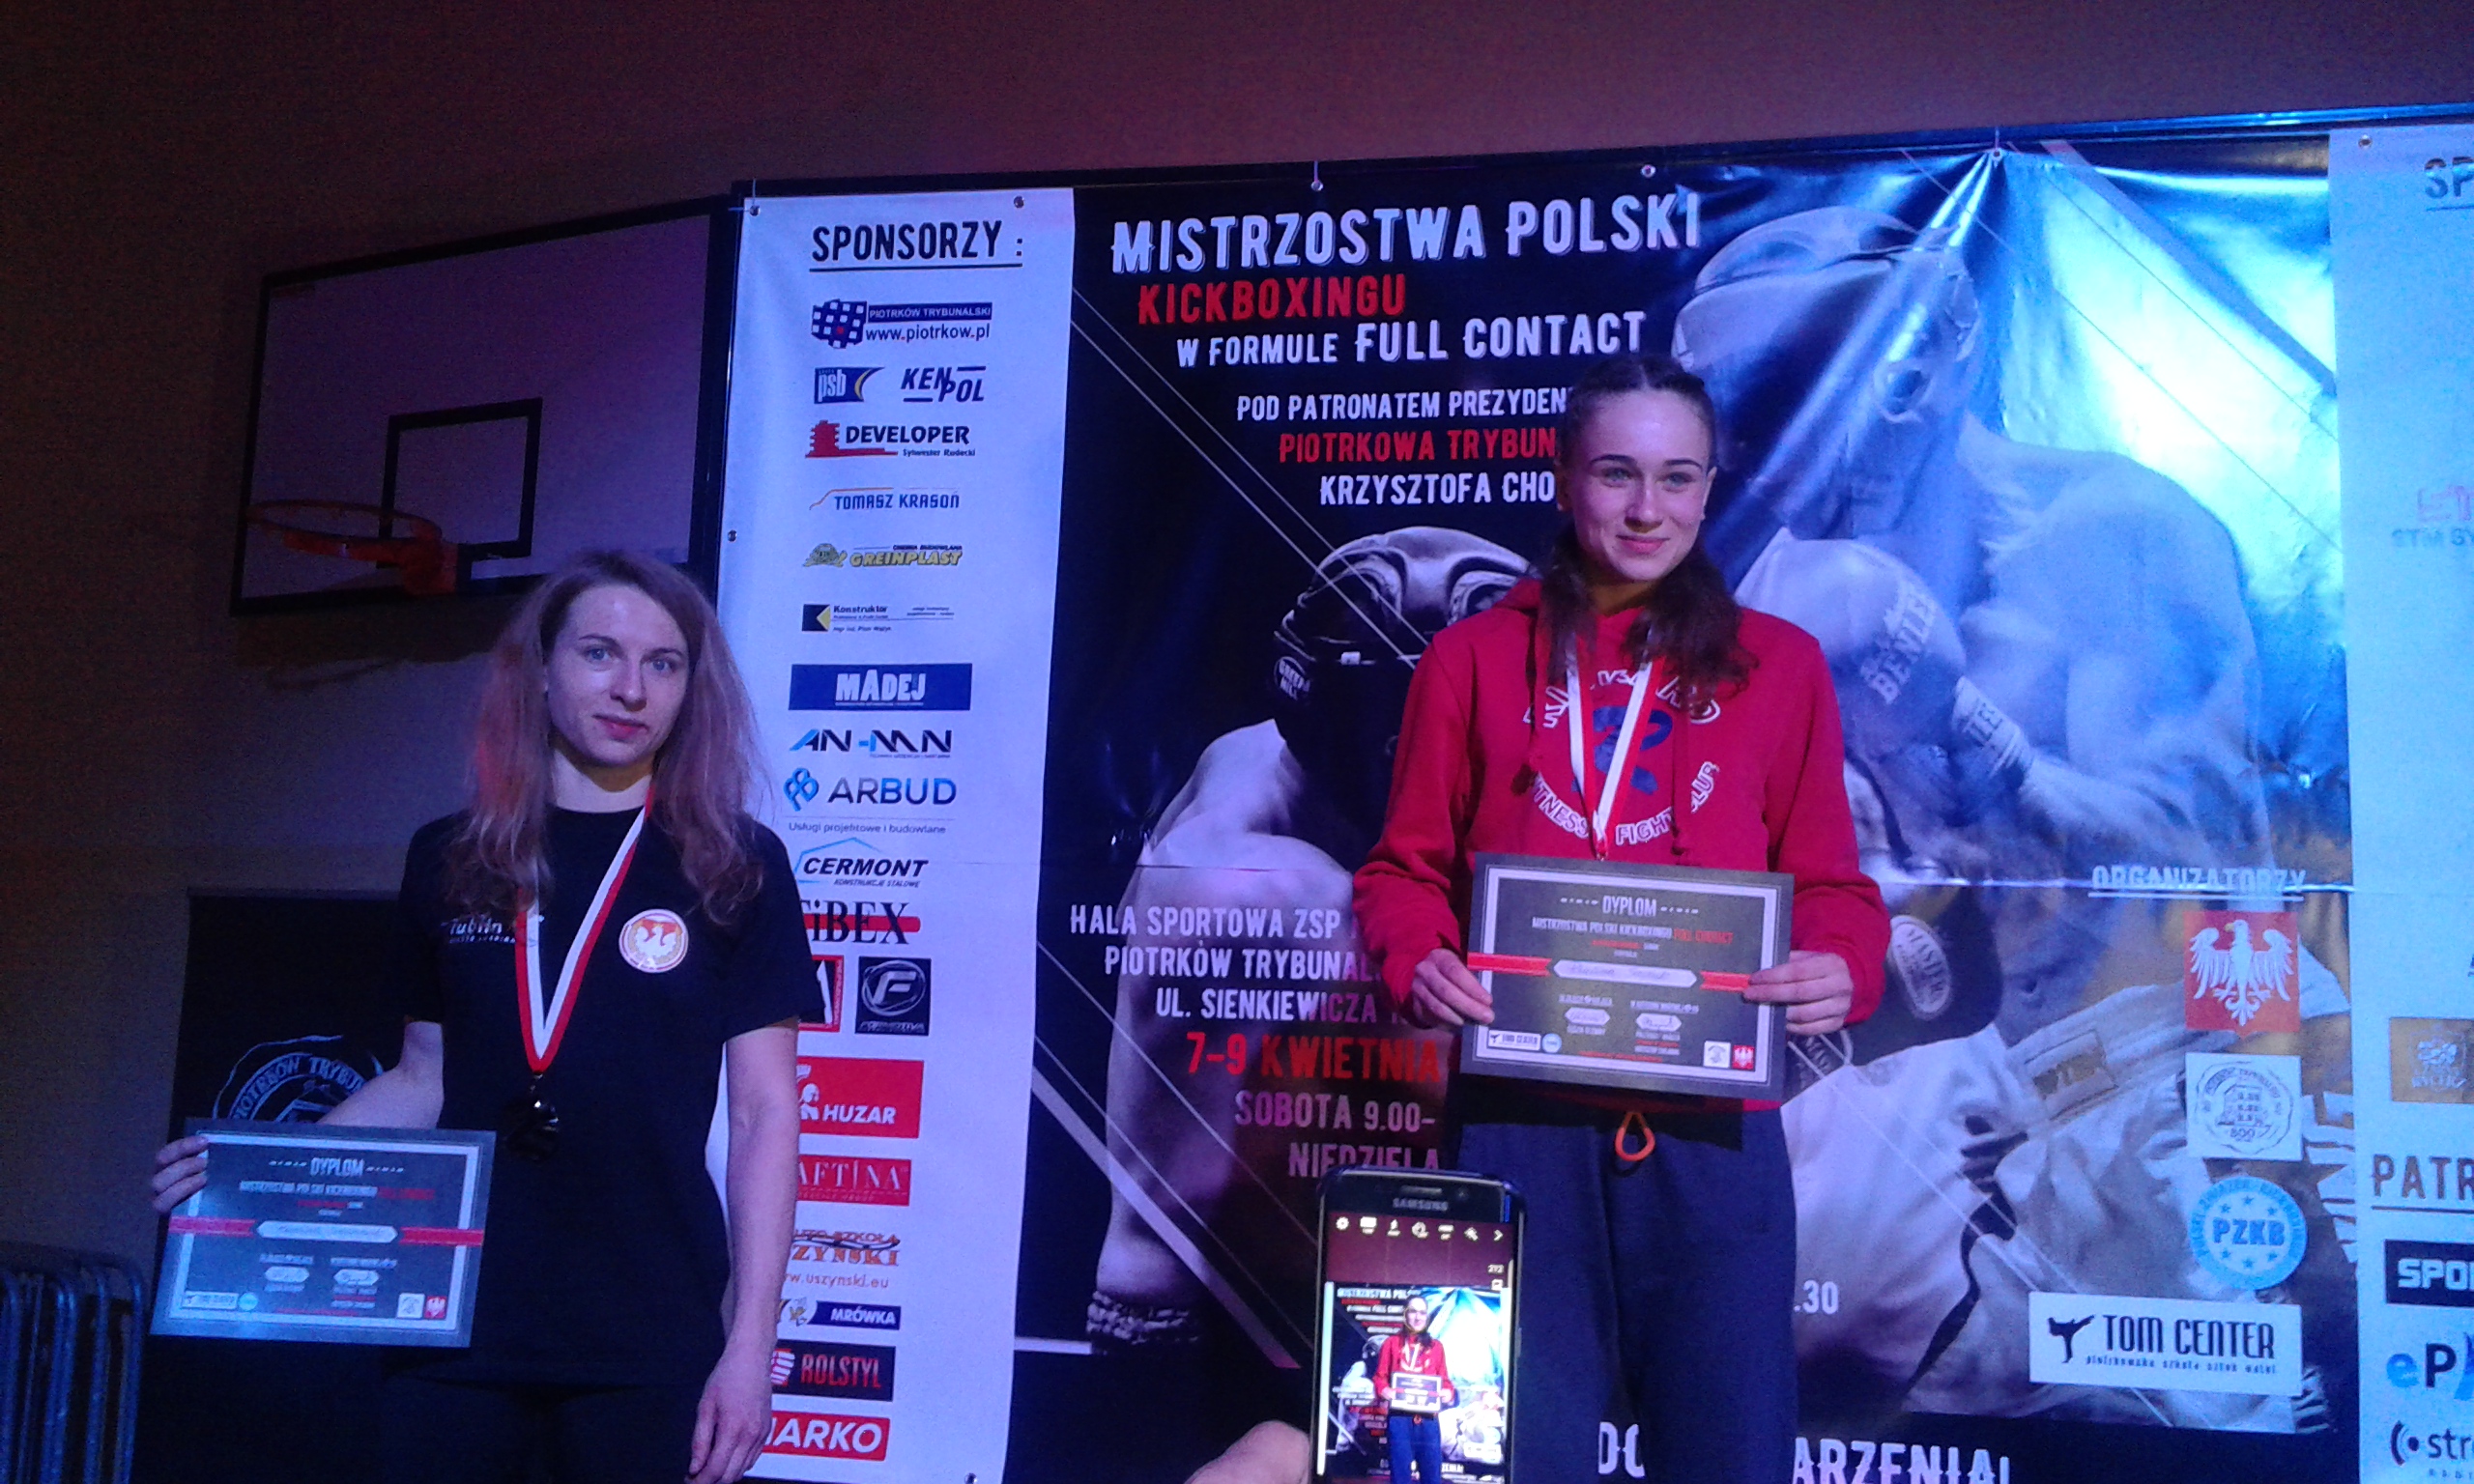 MP-FC_Paulina_Szewczuk-podium.jpg - 1.46 MB